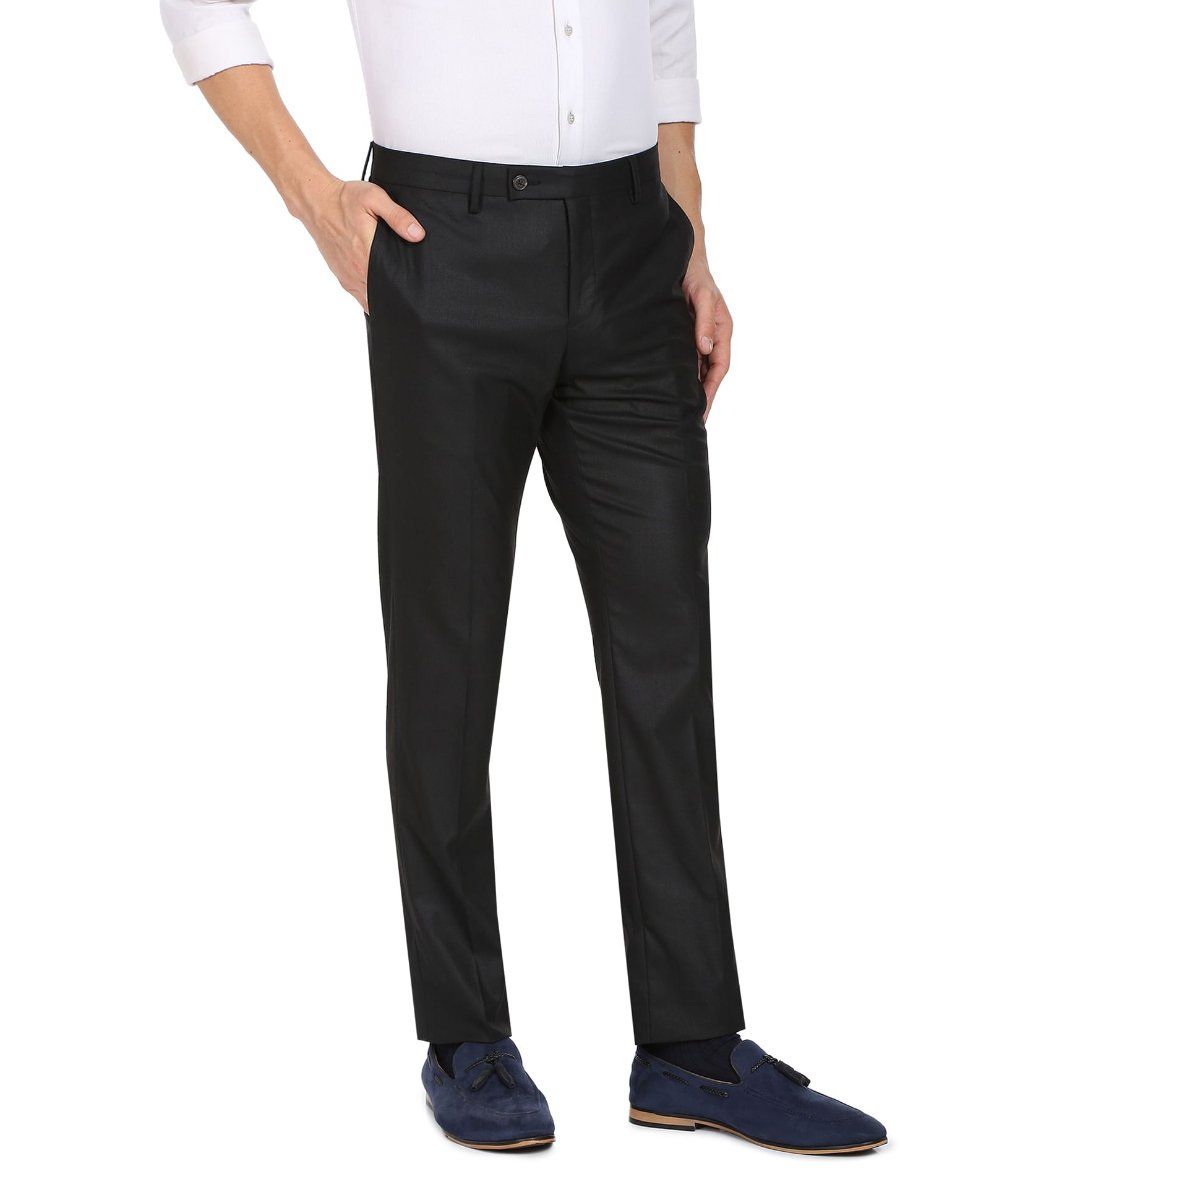 Buy Arrow Men Grey Slim Fit Patterned Check Formal Trousers online